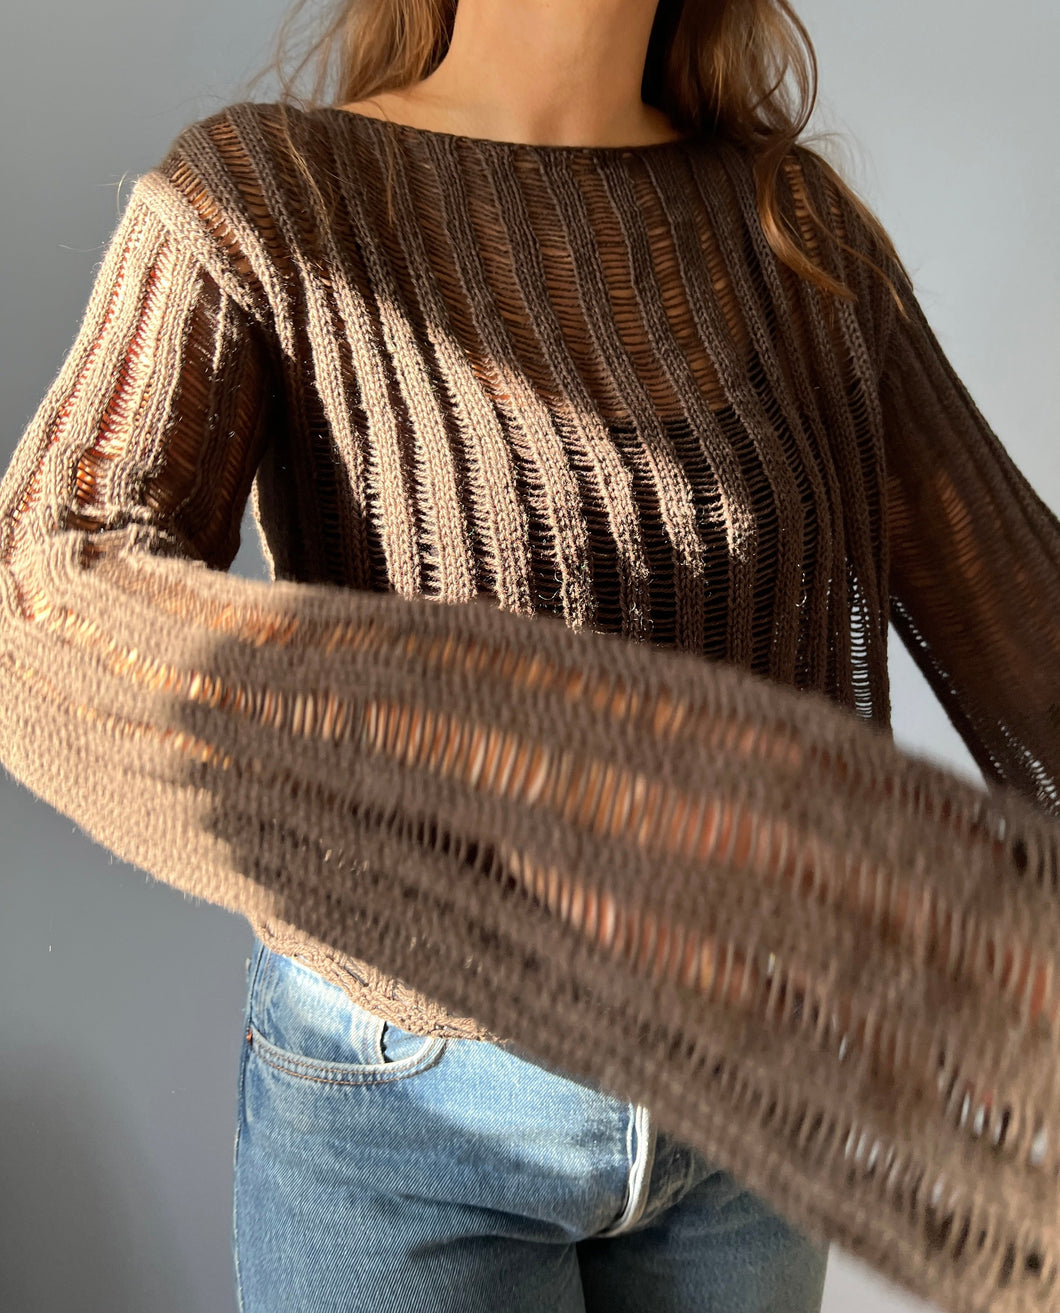 Deima's air blouse - knitting pattern (english)